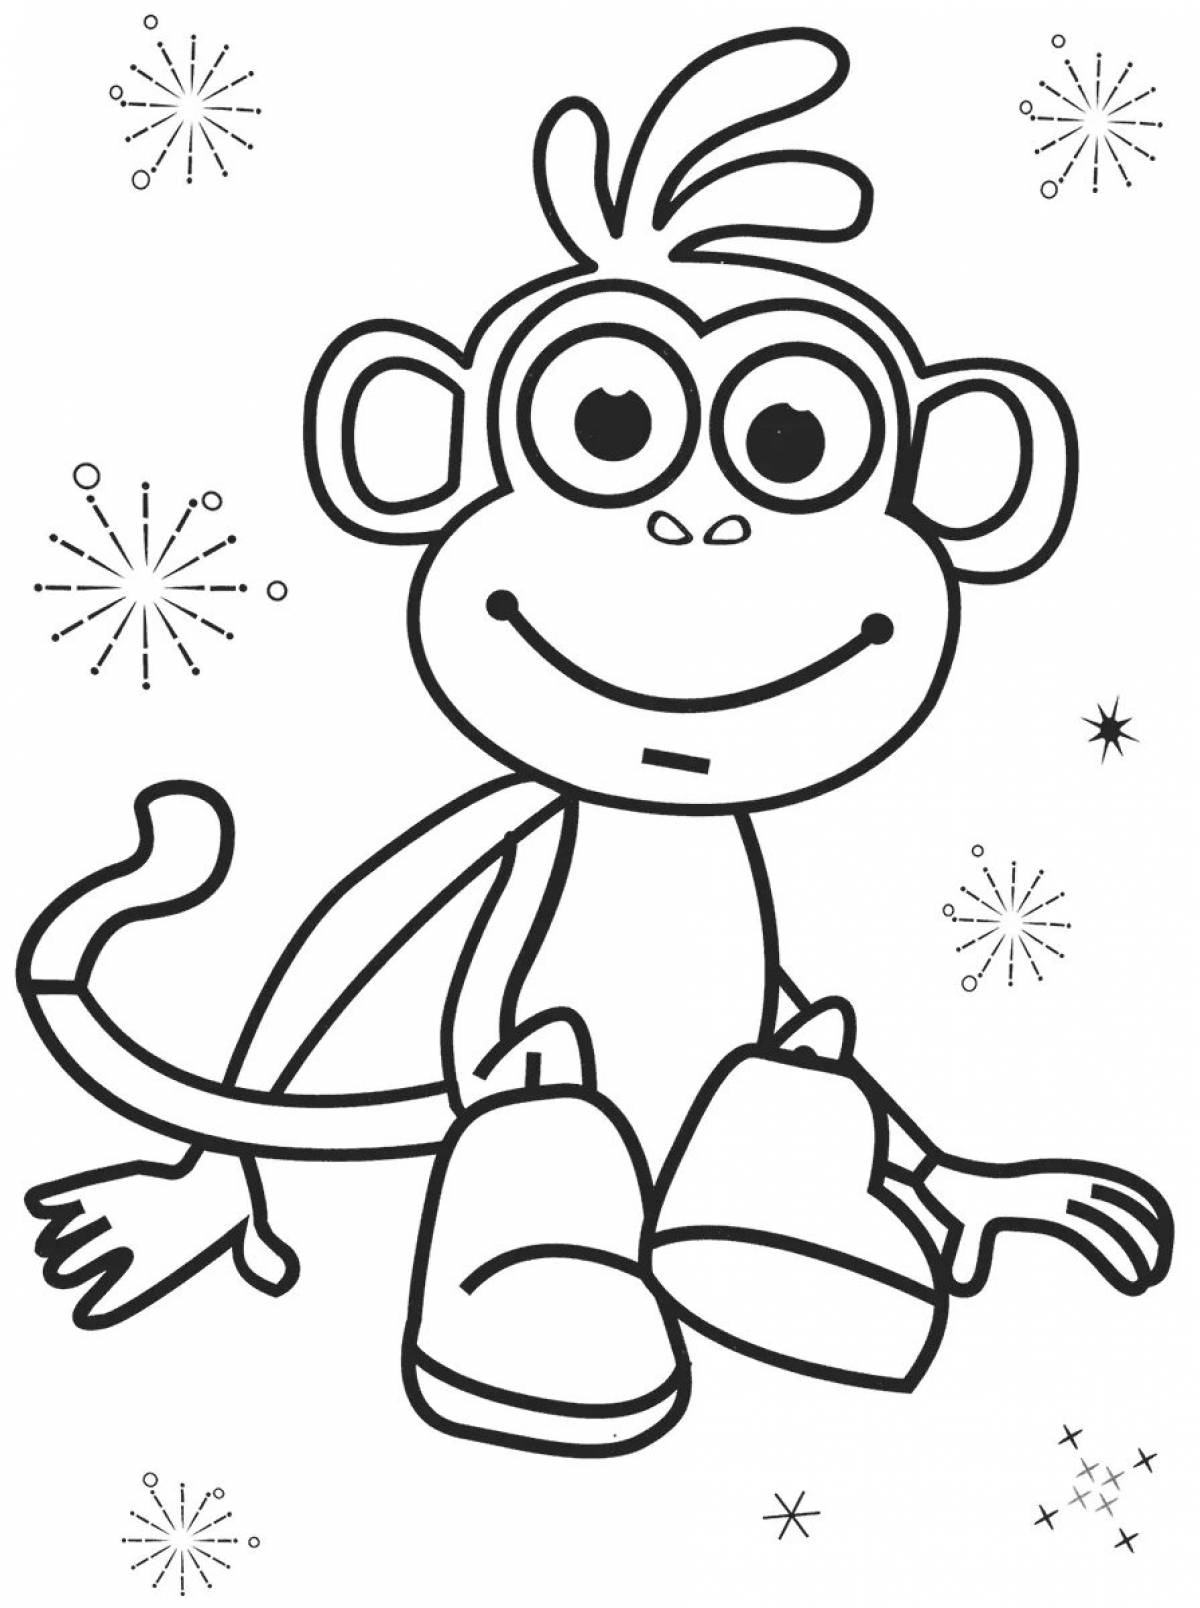 Impressive monkey coloring book